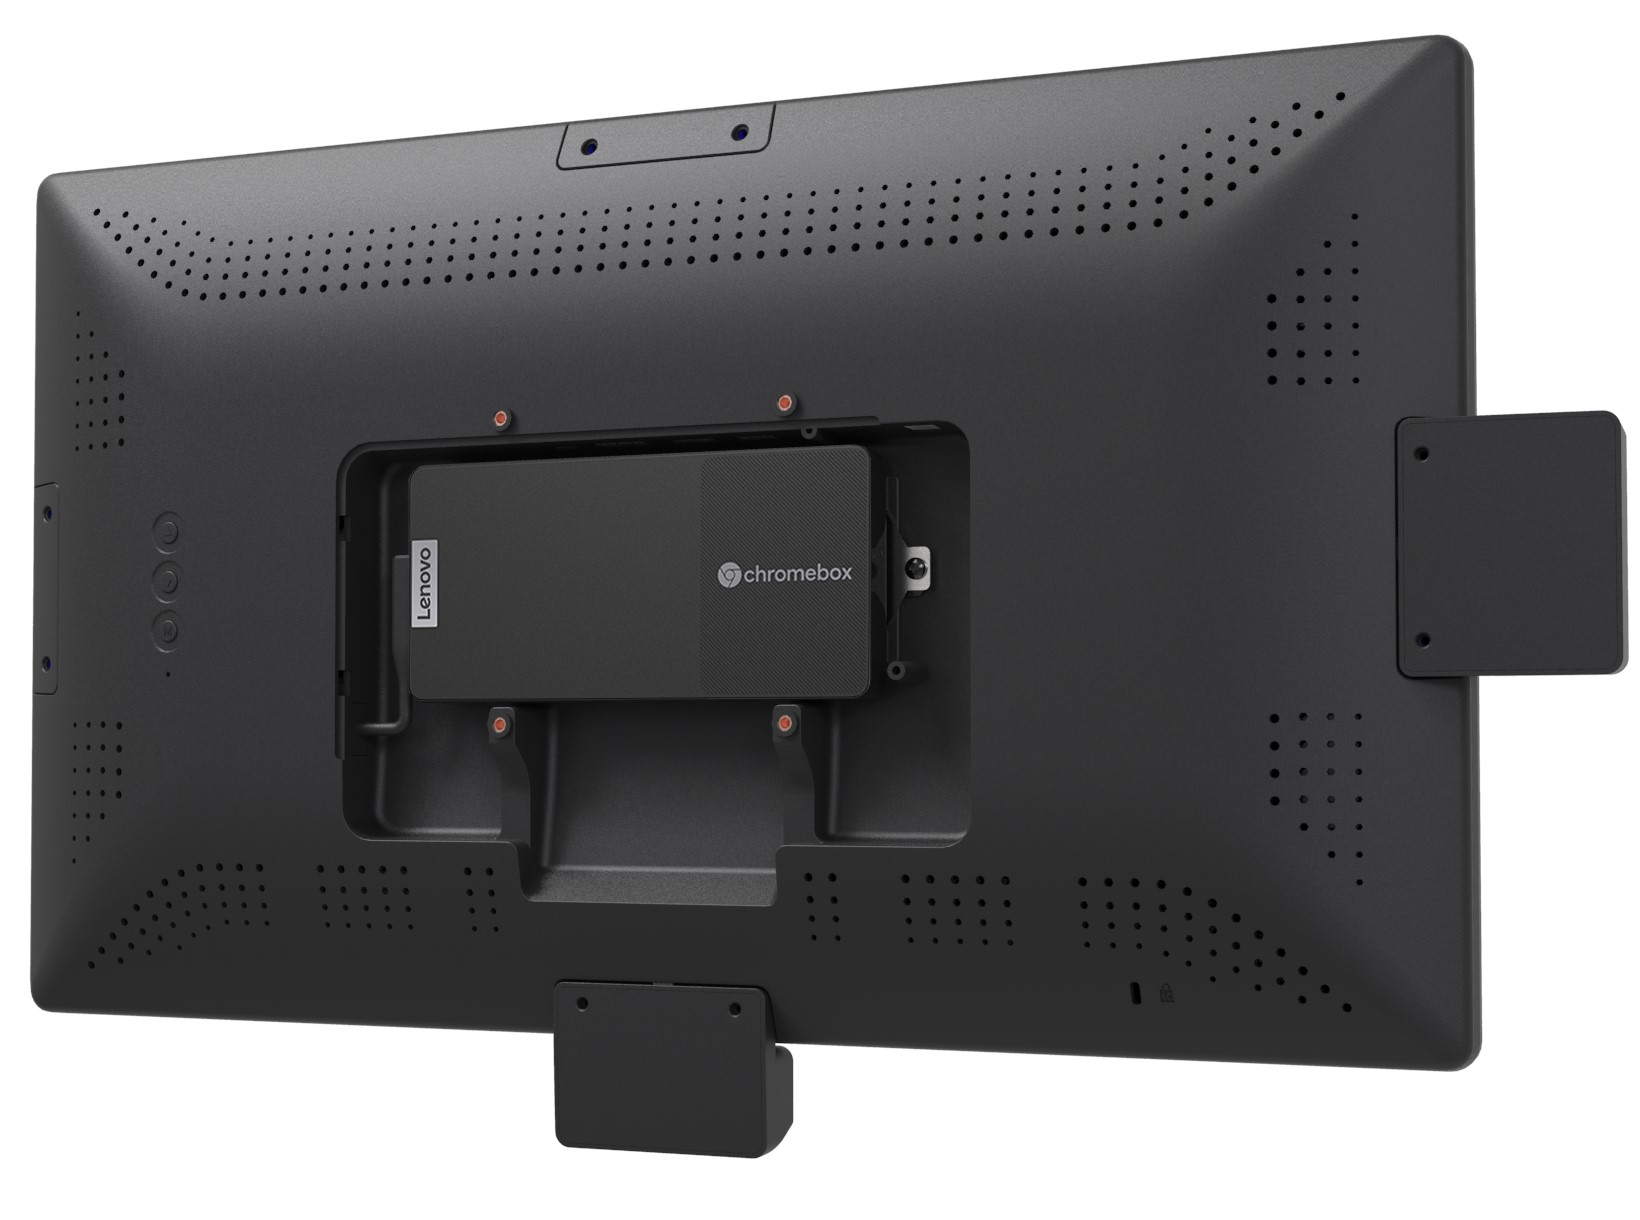 Lenovo launches the new Chromebox Micro media player